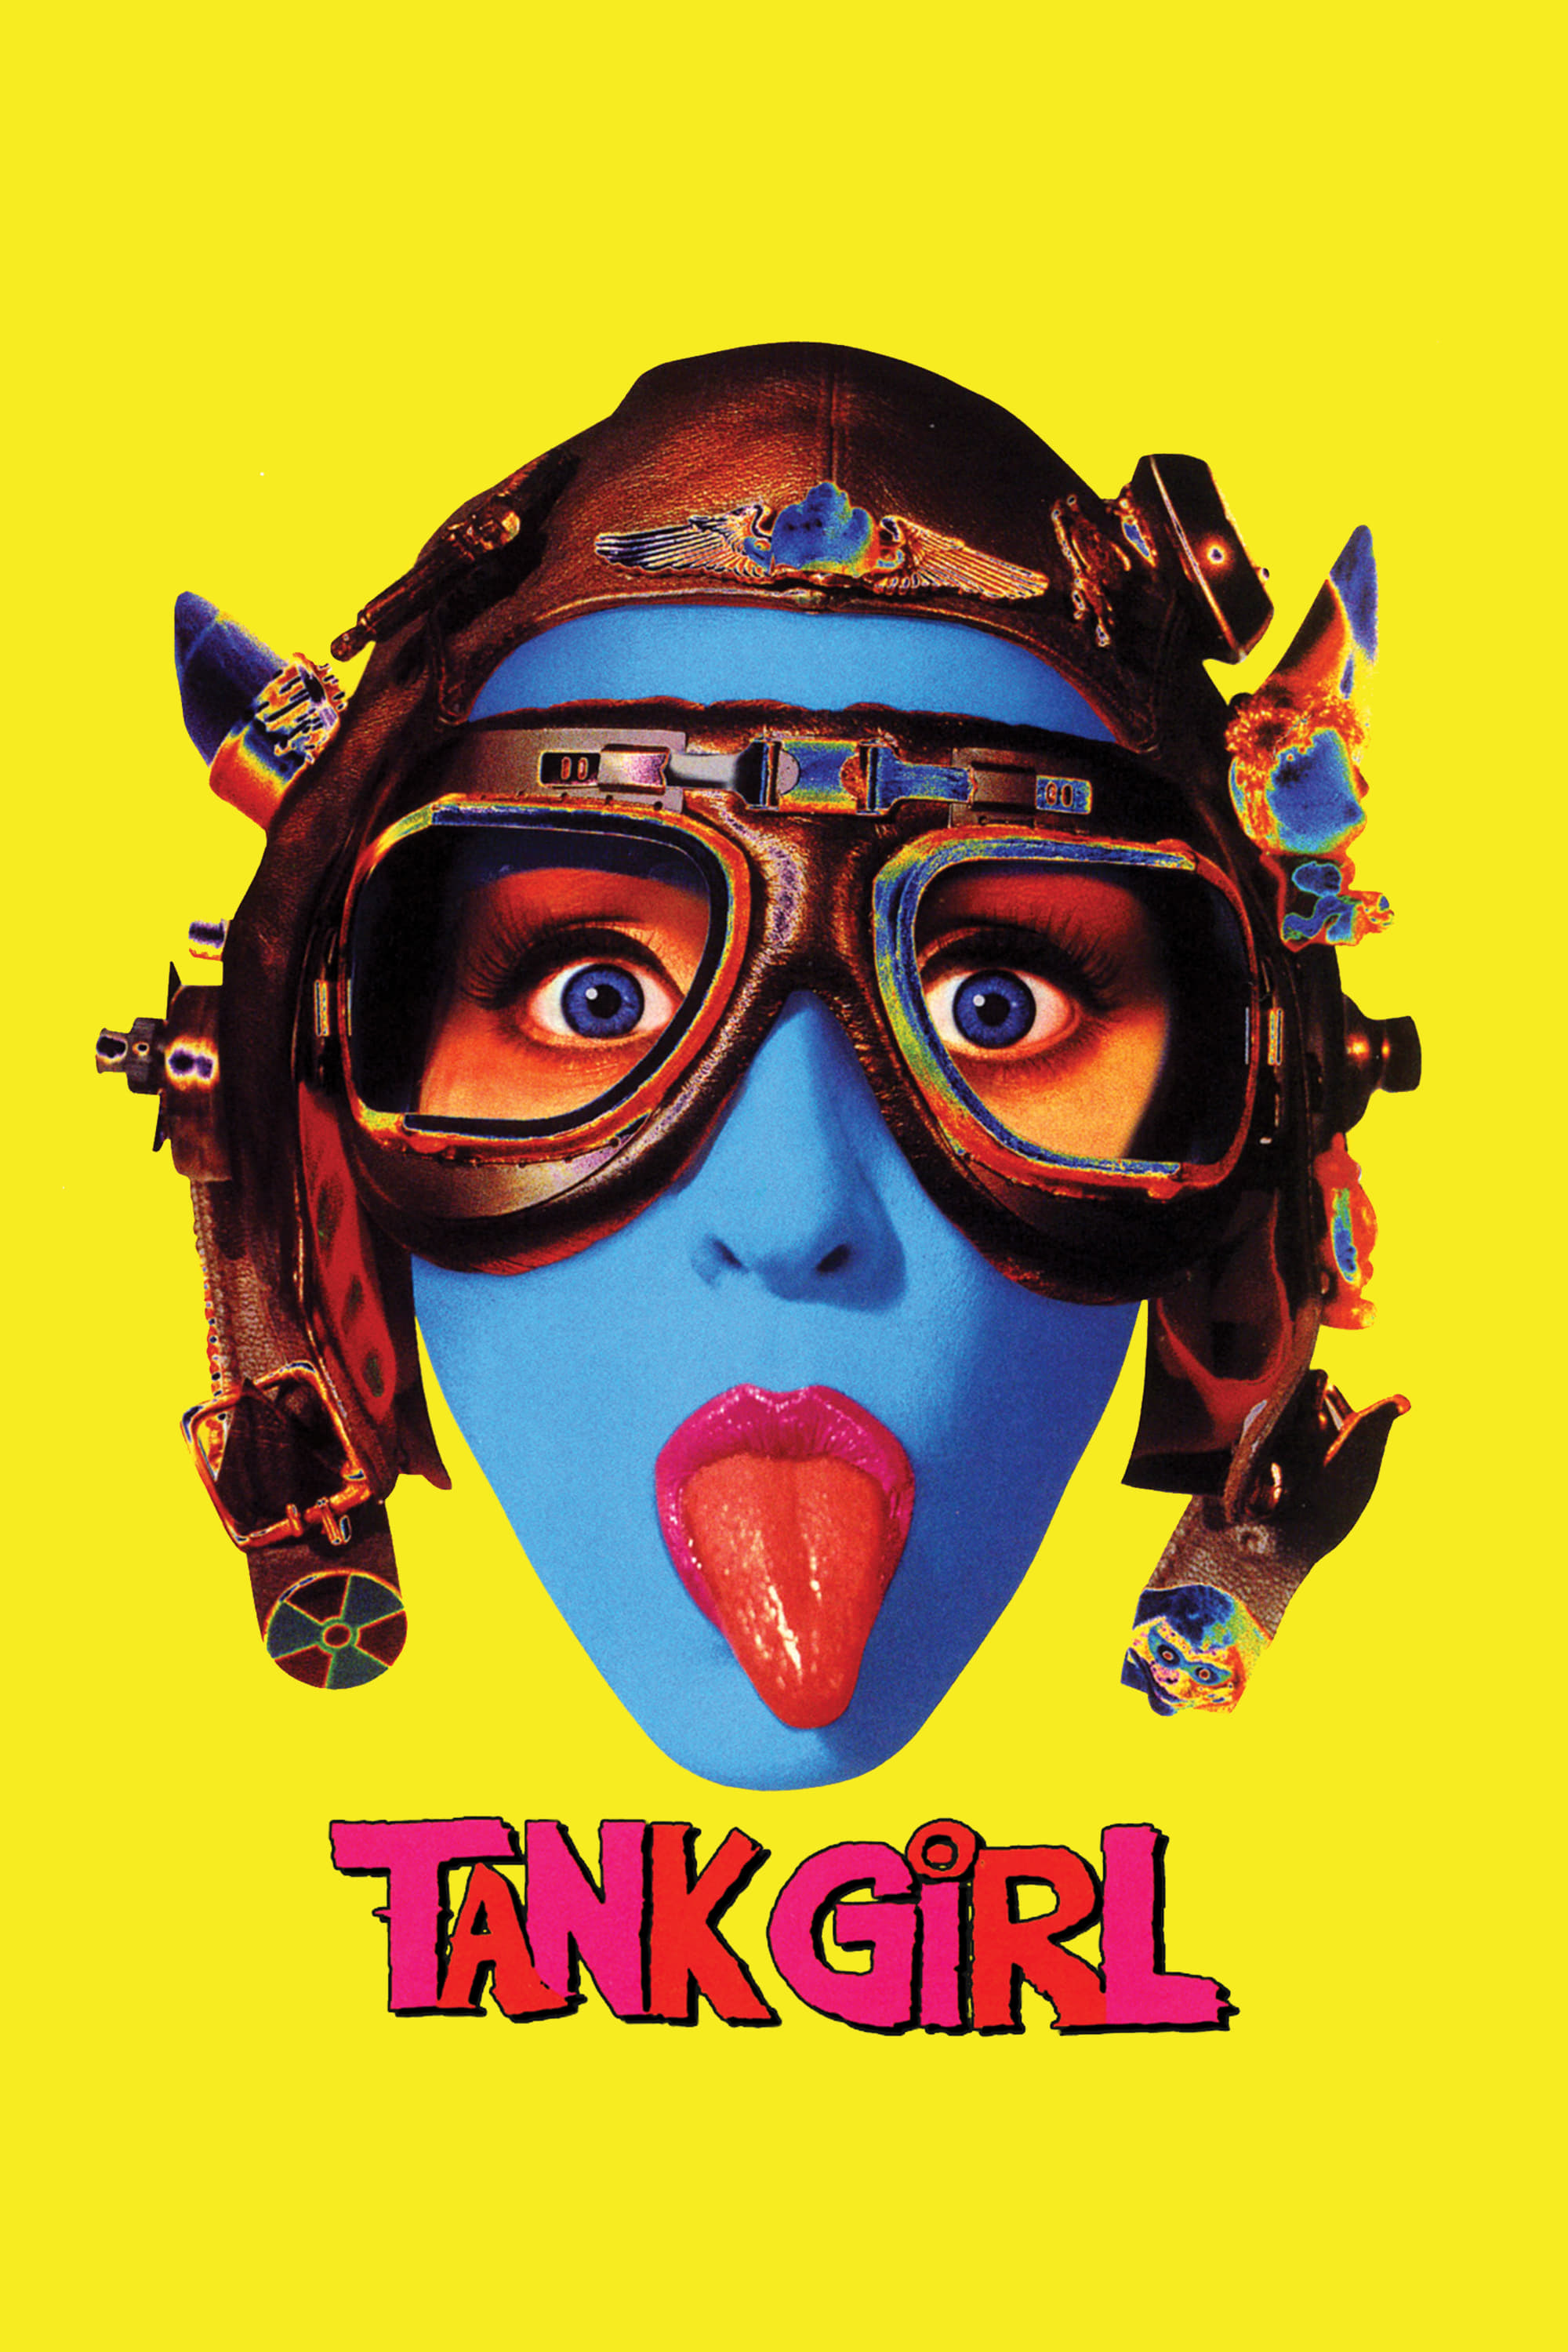 Tank Girl - Detonando o Futuro